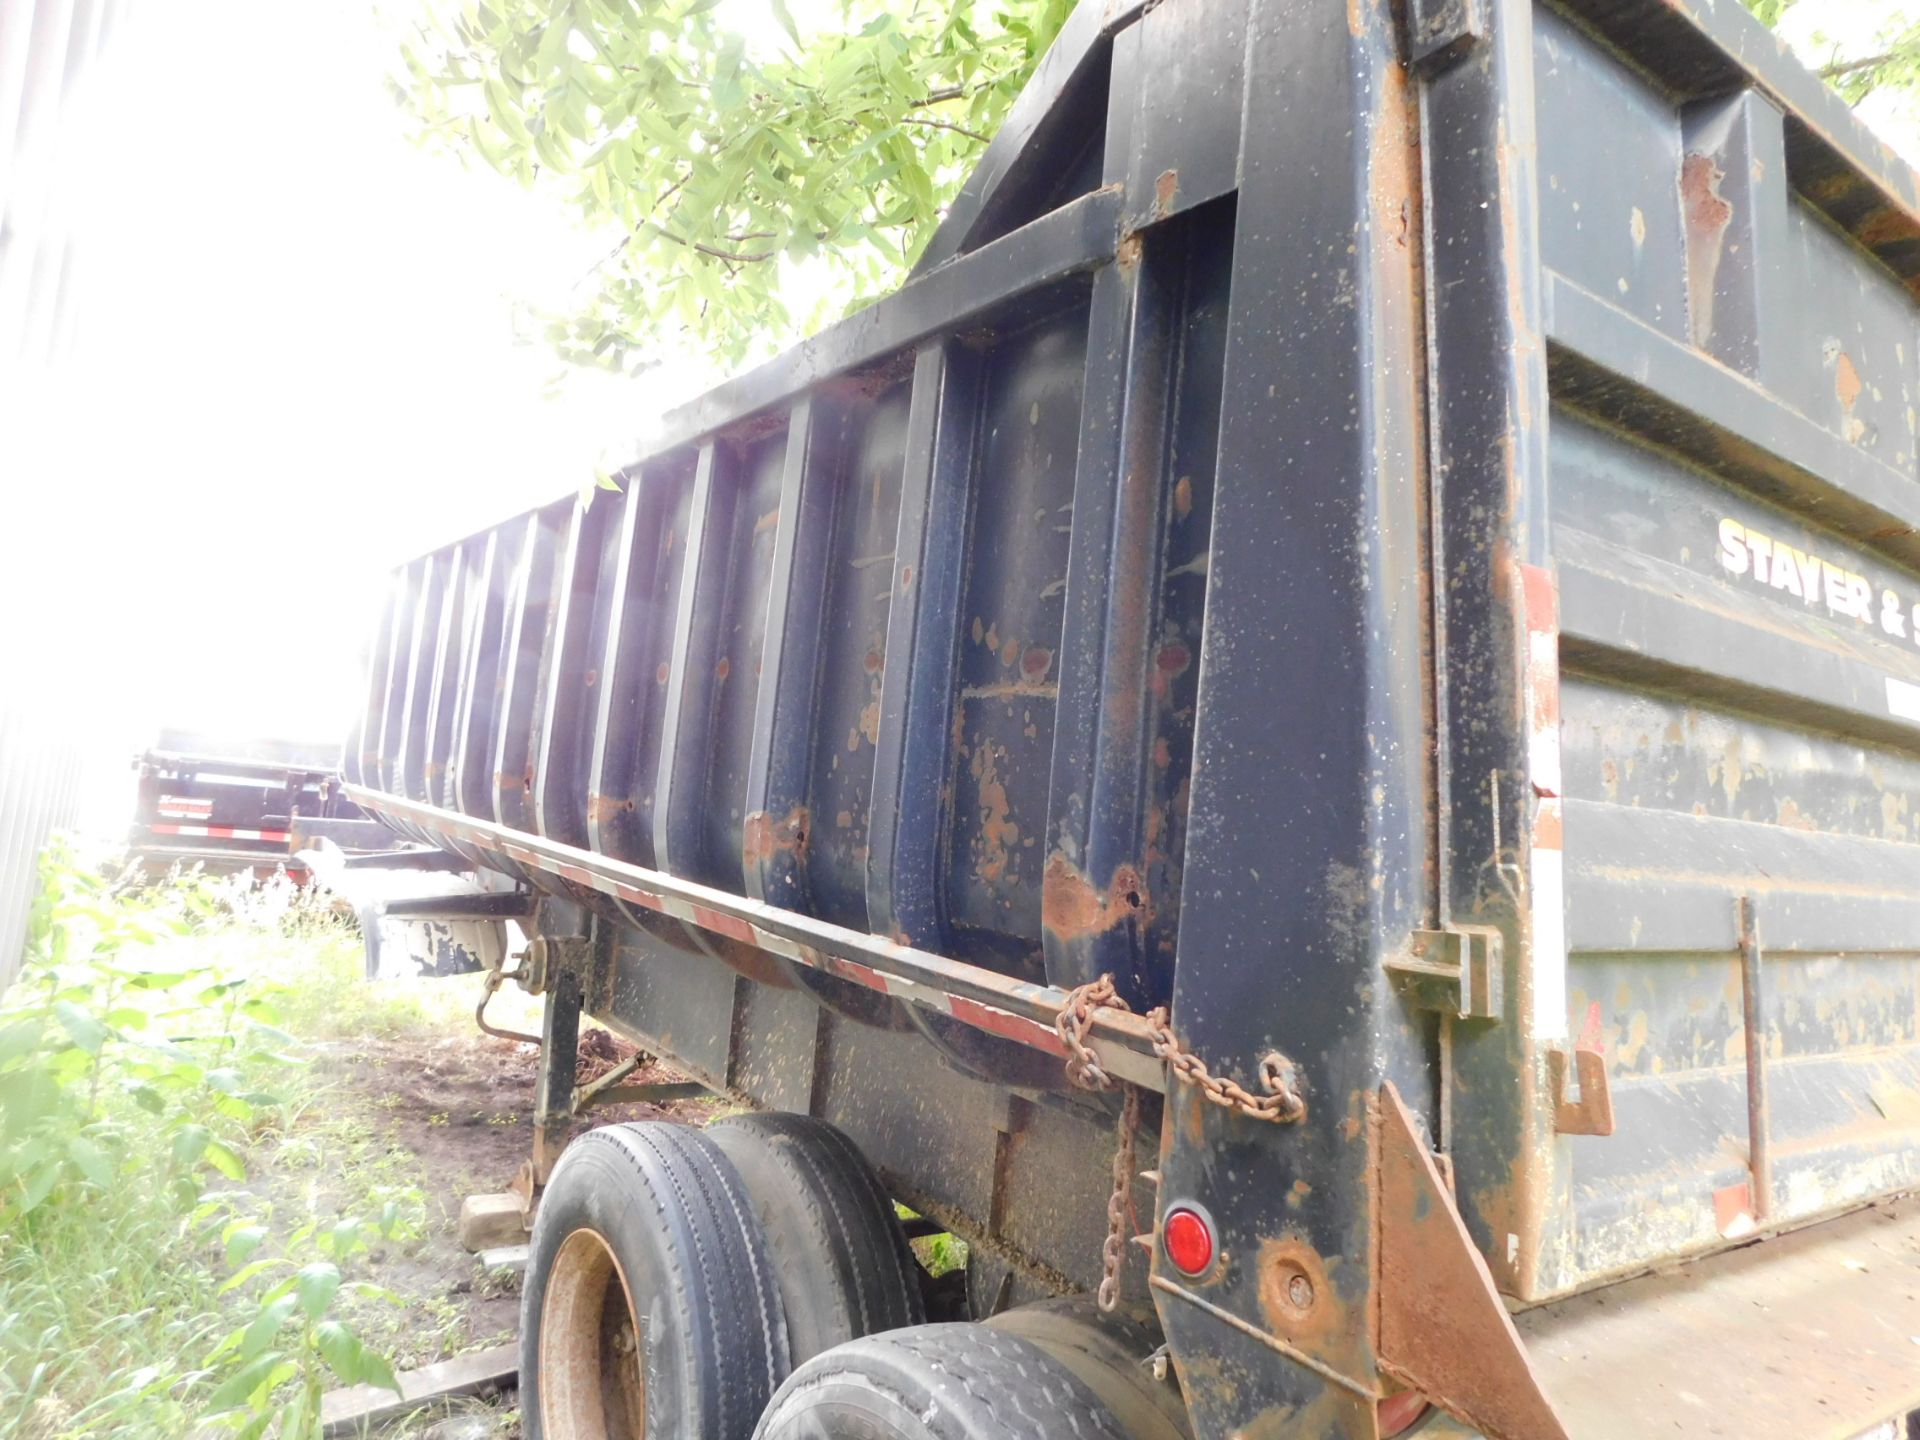 Fruehauf Tandem Axle Semi-Dump Trailer, VIN N/A, 20' Dump Bed ( NO TITLE ) - Image 6 of 17